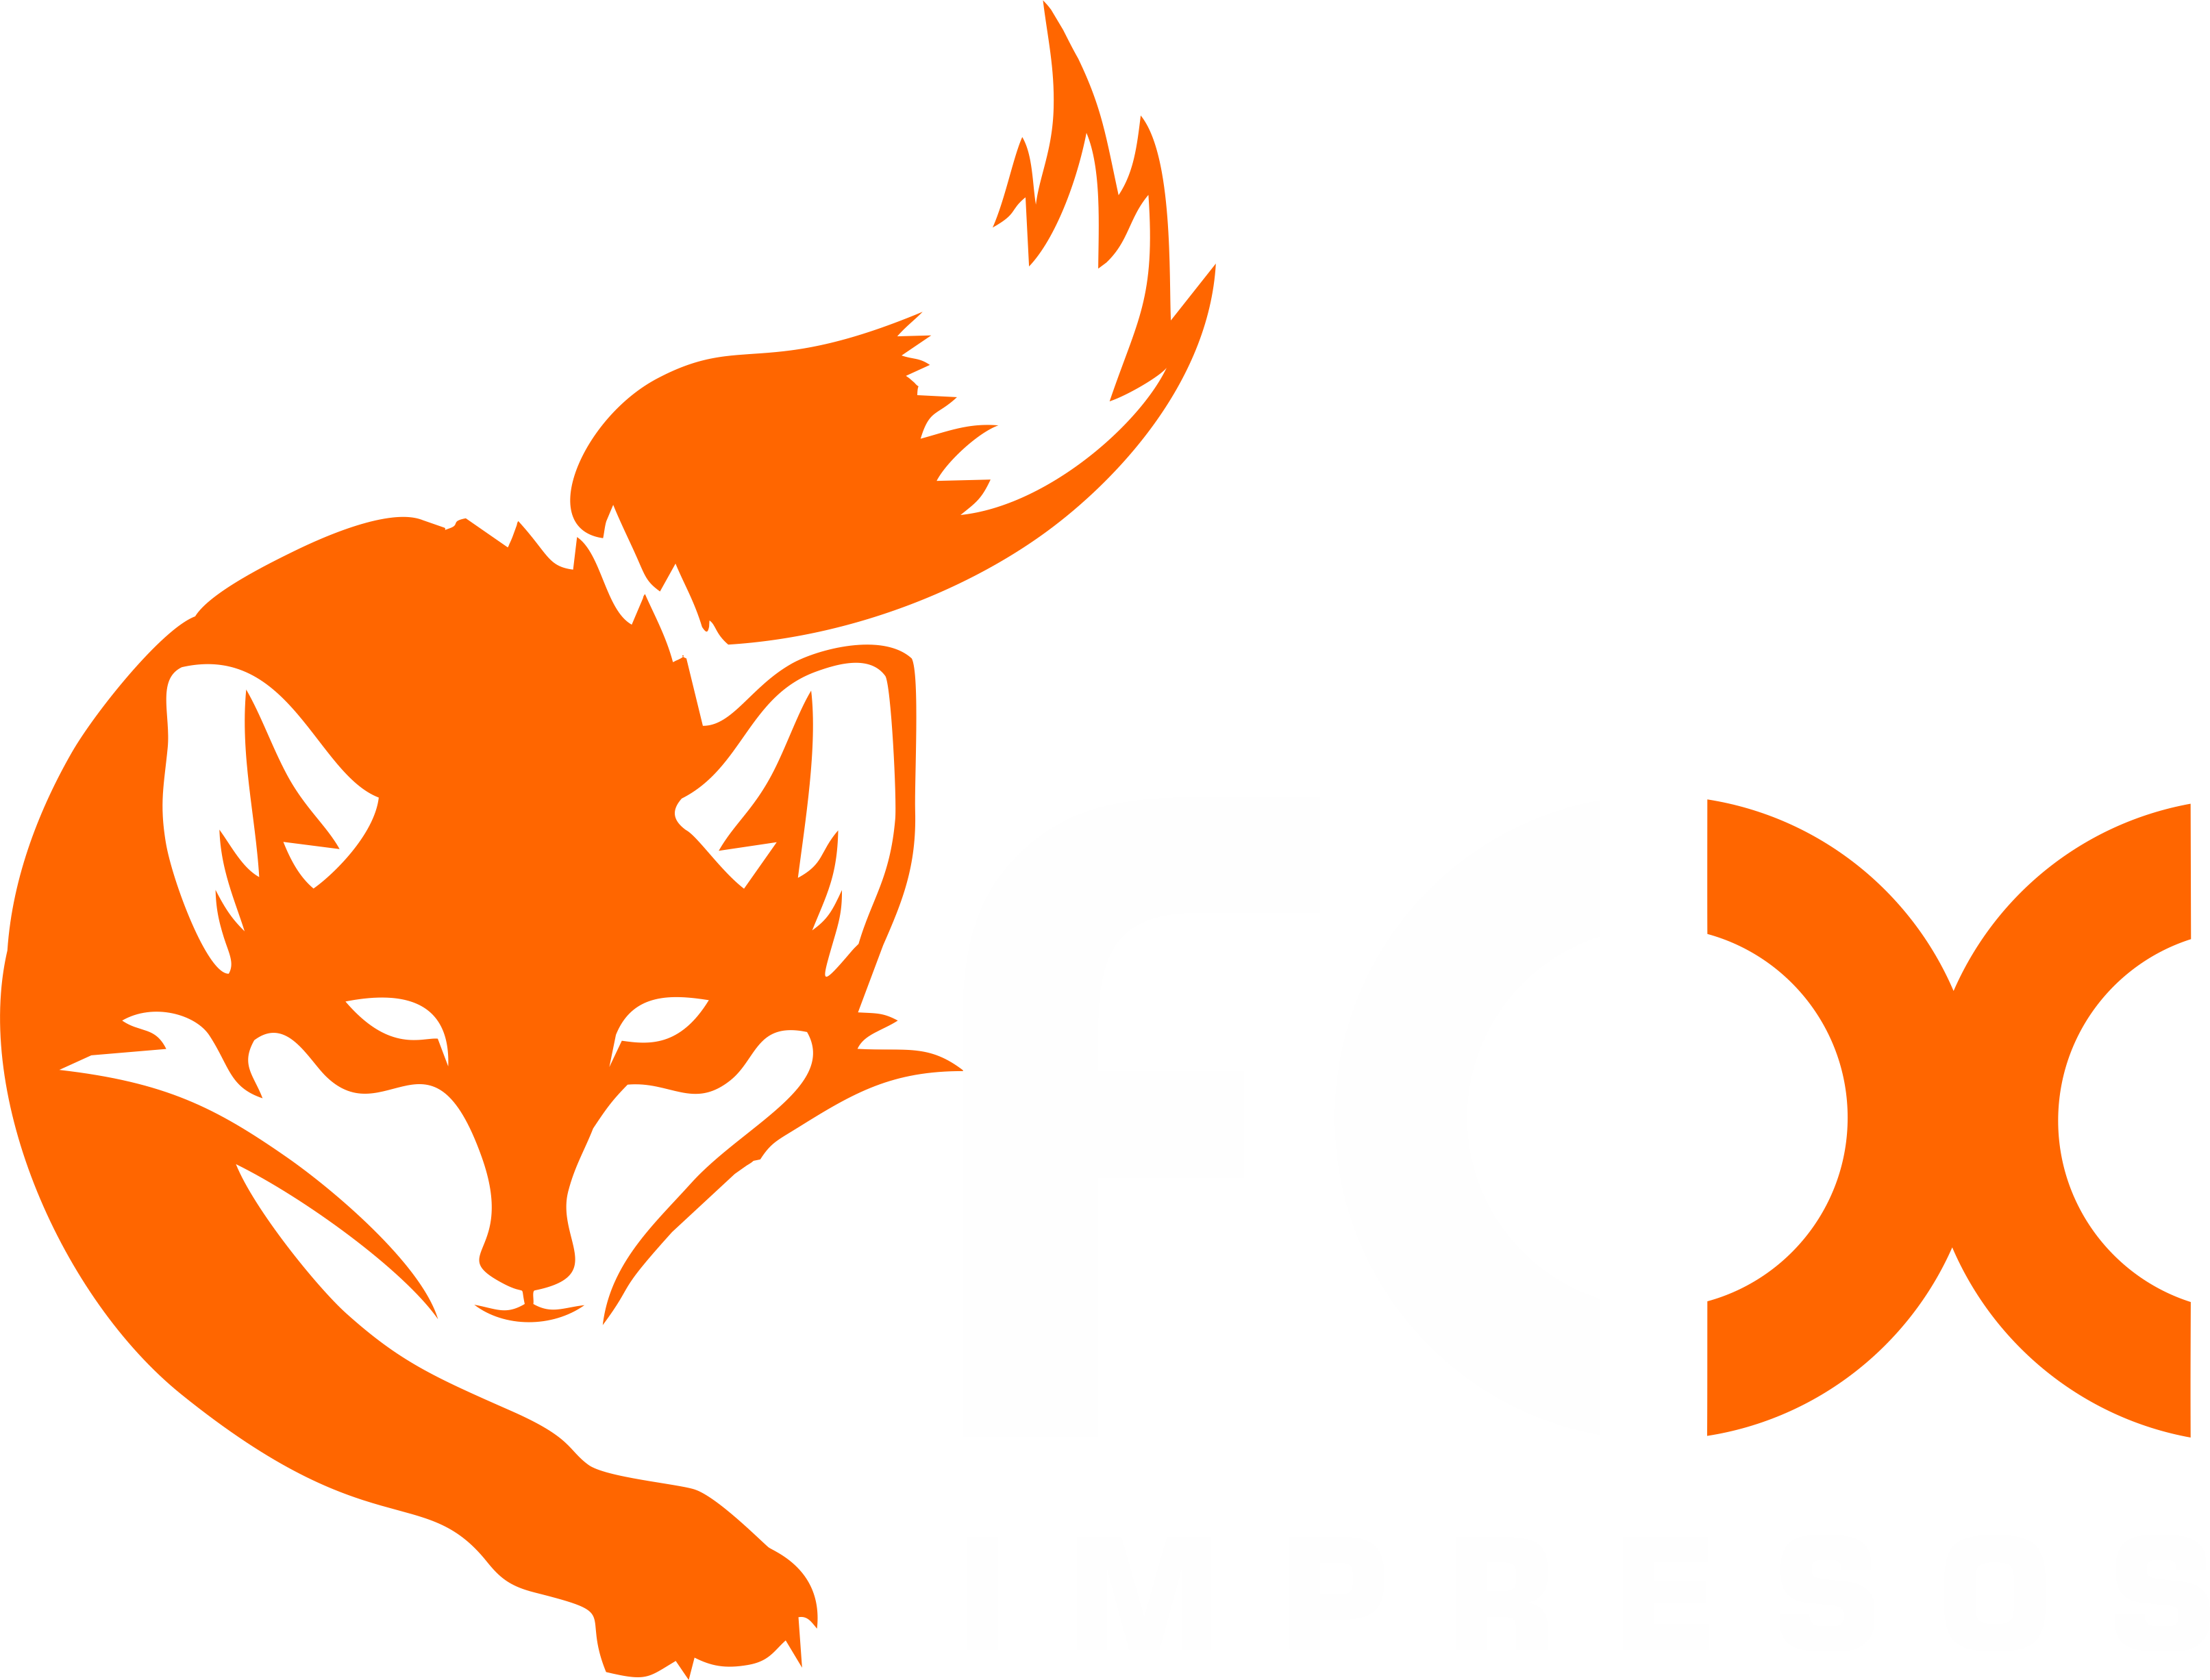 Fox Impresos